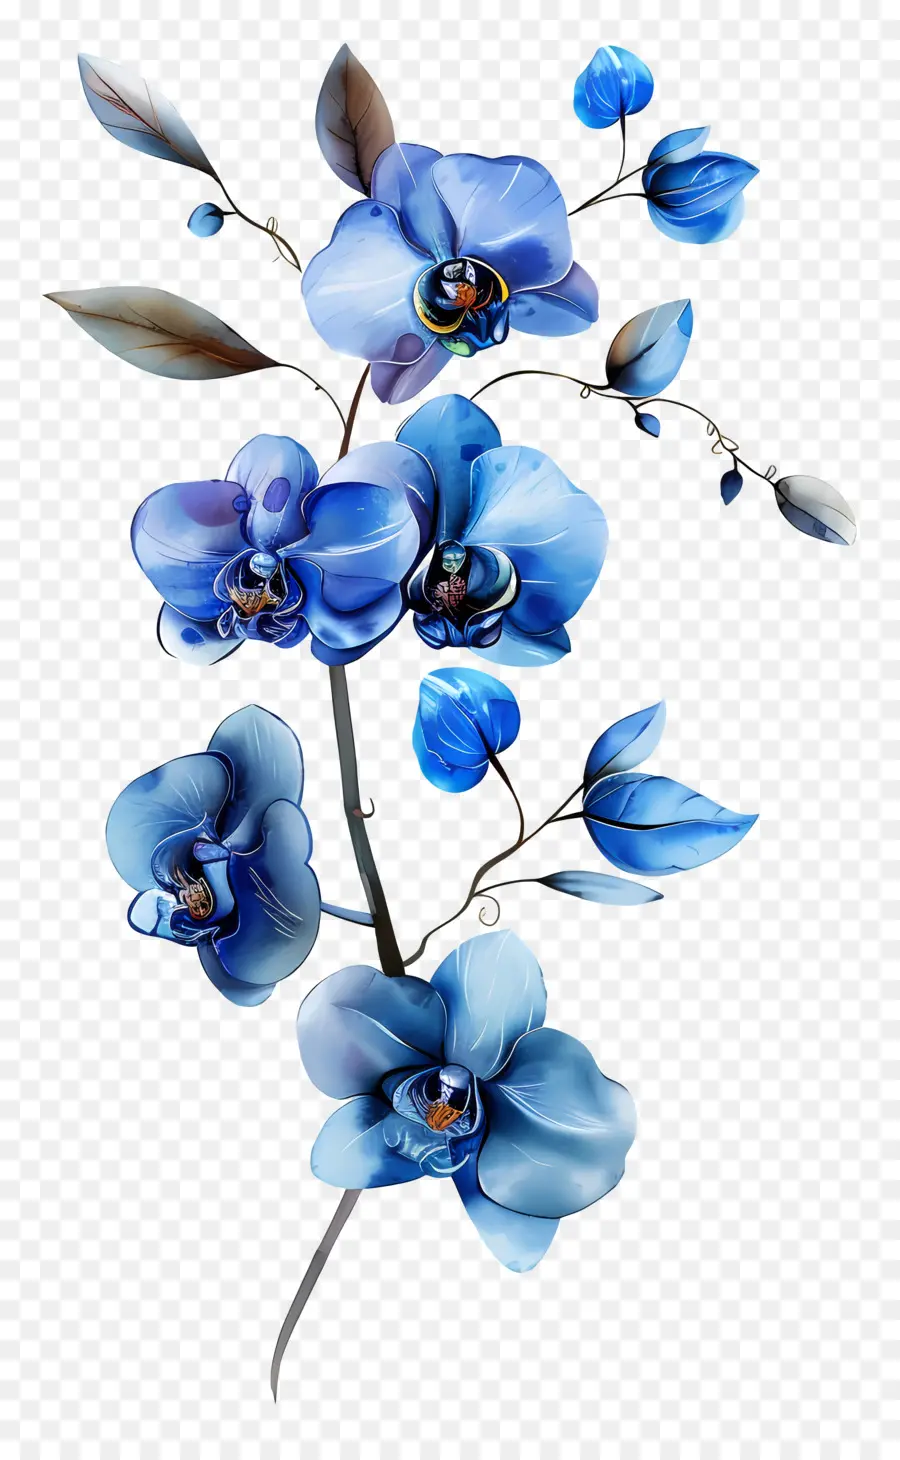 Blaue Orchideen Blaue Orchideen Bouquet Blumen rosa Blüten - Blaue Orchideen mit weißen und rosa Blüten